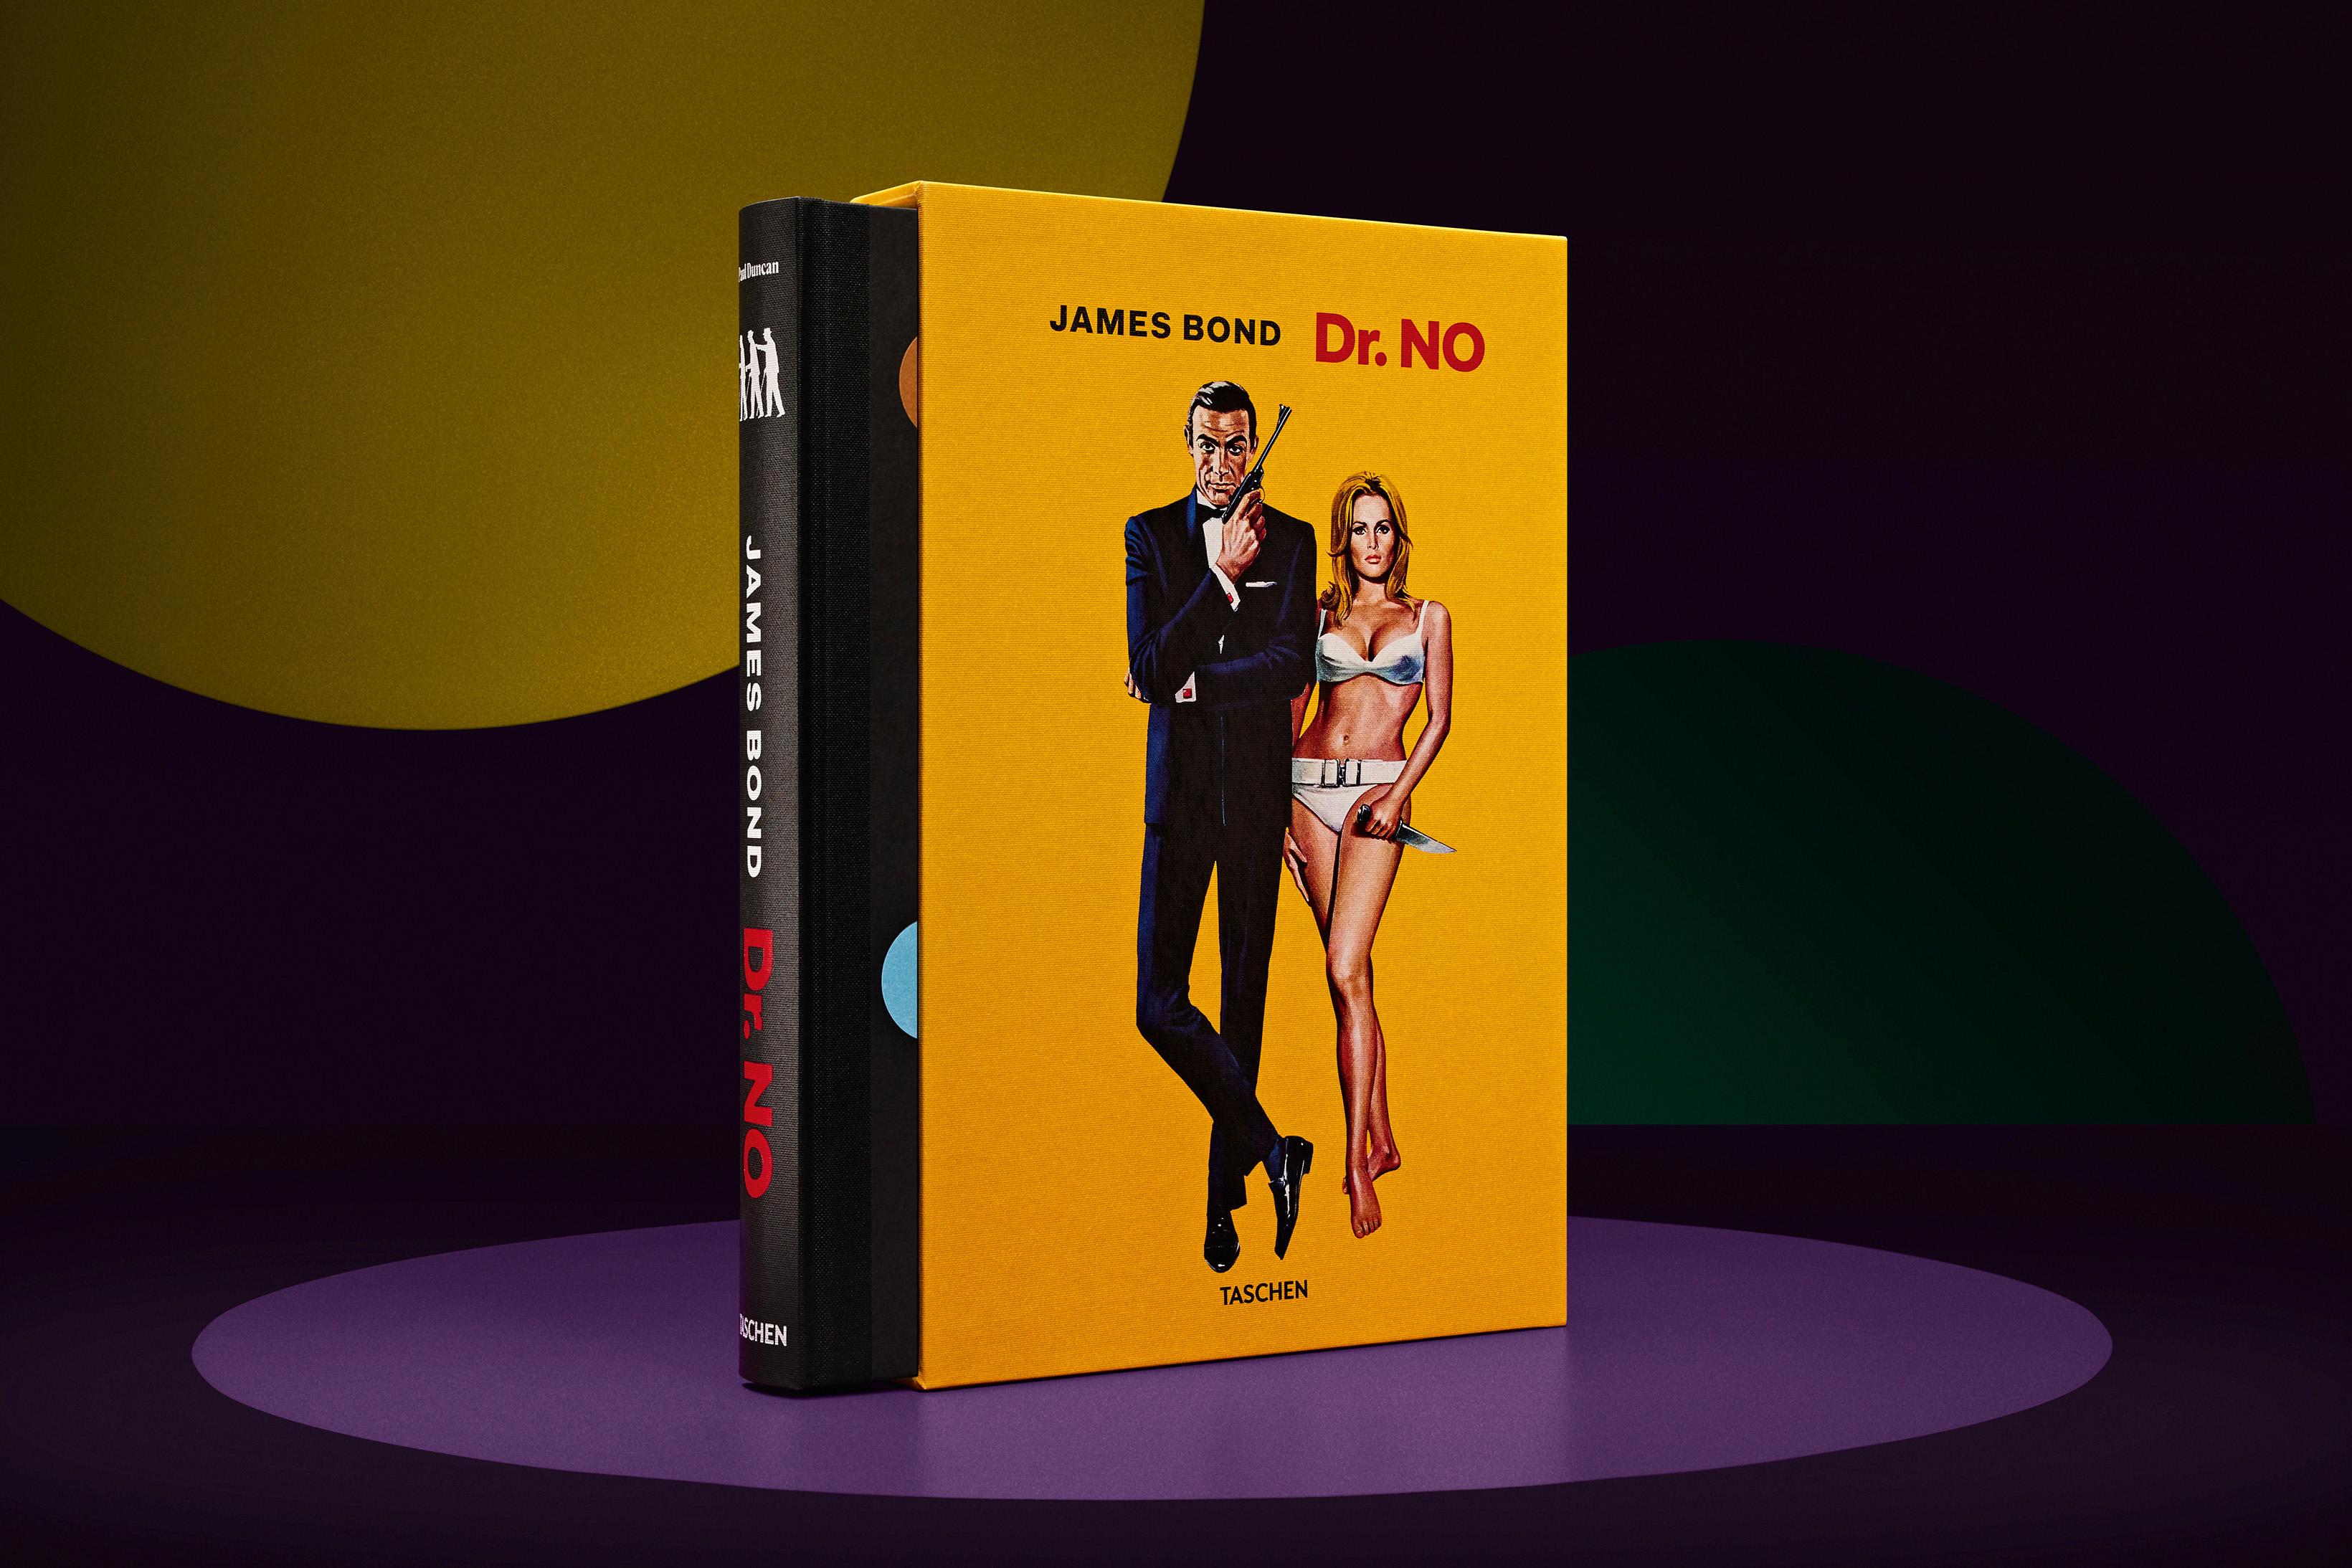 James Bond. Dr. No. ‘Bond, James Bond’, 1962. Limited Ed ChromaLuxe Print & Book For Sale 8